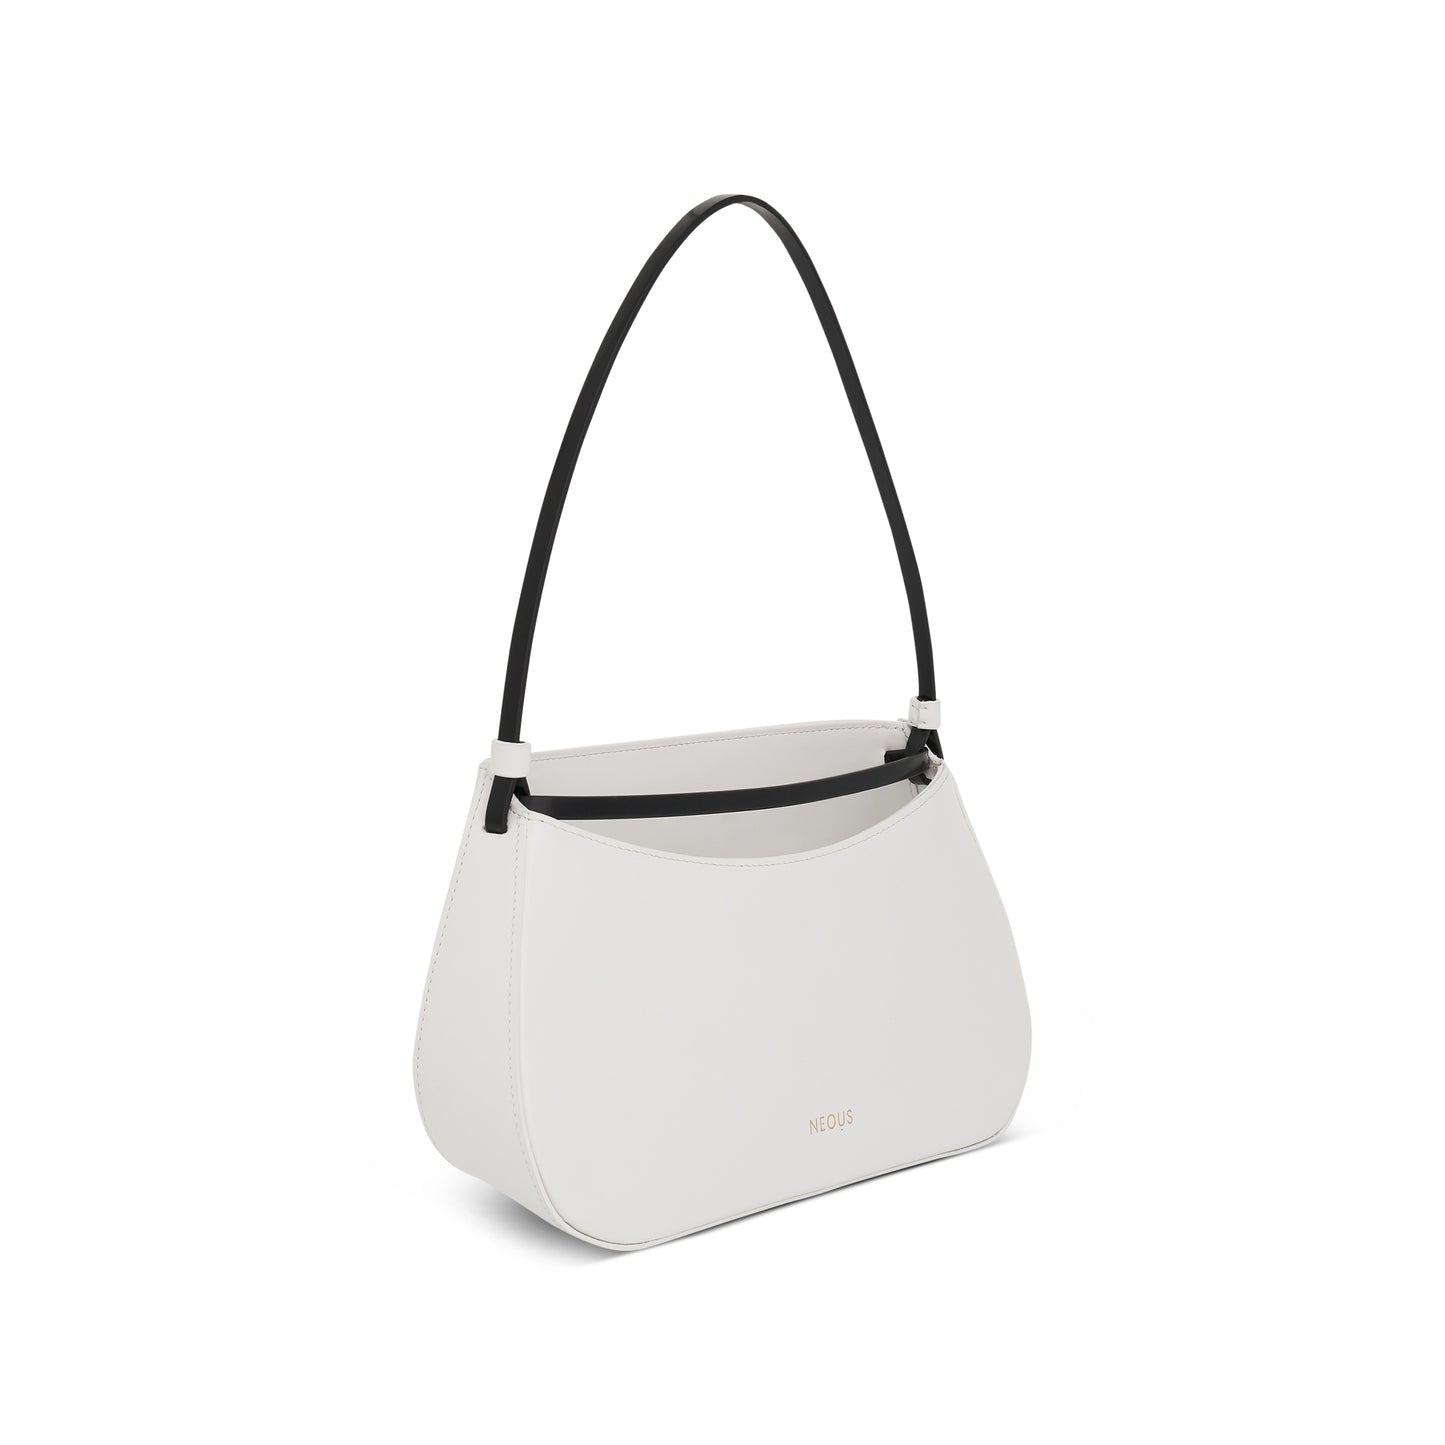 Zeta Baguette Bag in White/Black